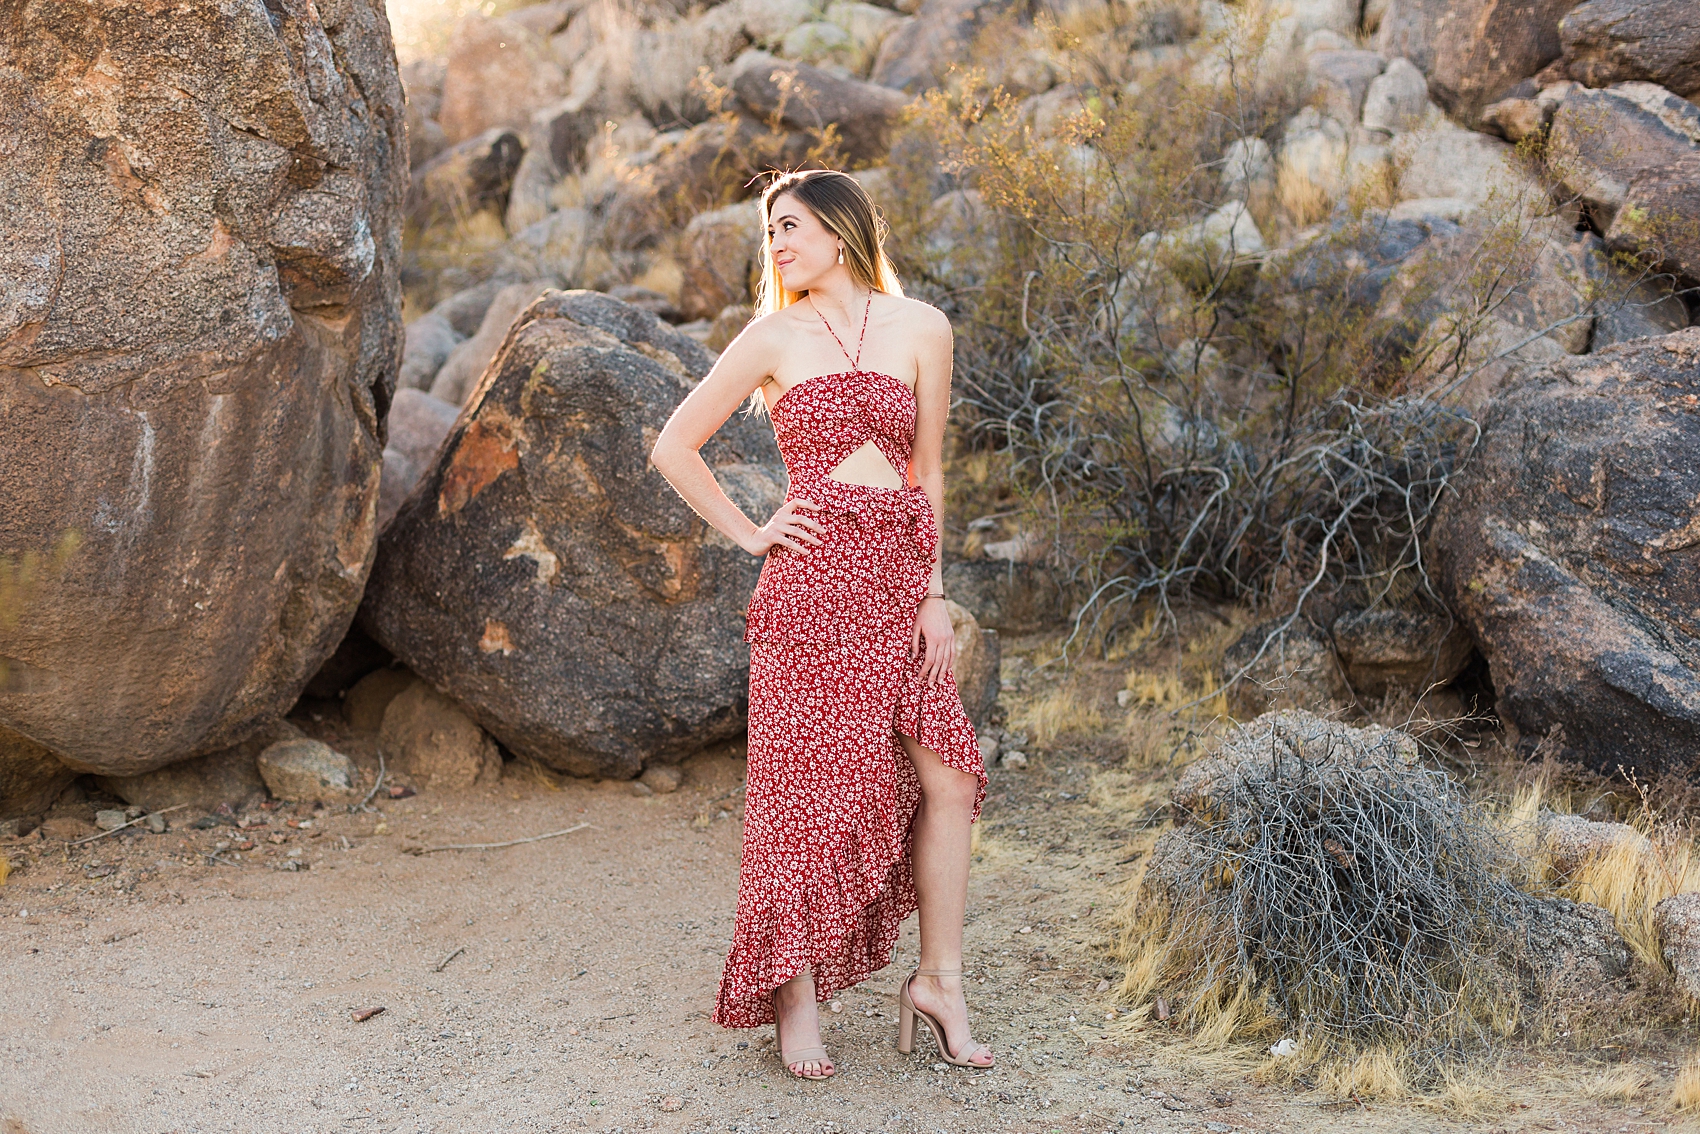 Leah Hope Photography | Scottsdale Phoenix Arizona | Desert Landscape Cactus Boulder Scenery | College Senior Pictures | RN | What to Wear | Senior Poses | Champagne | Graduation